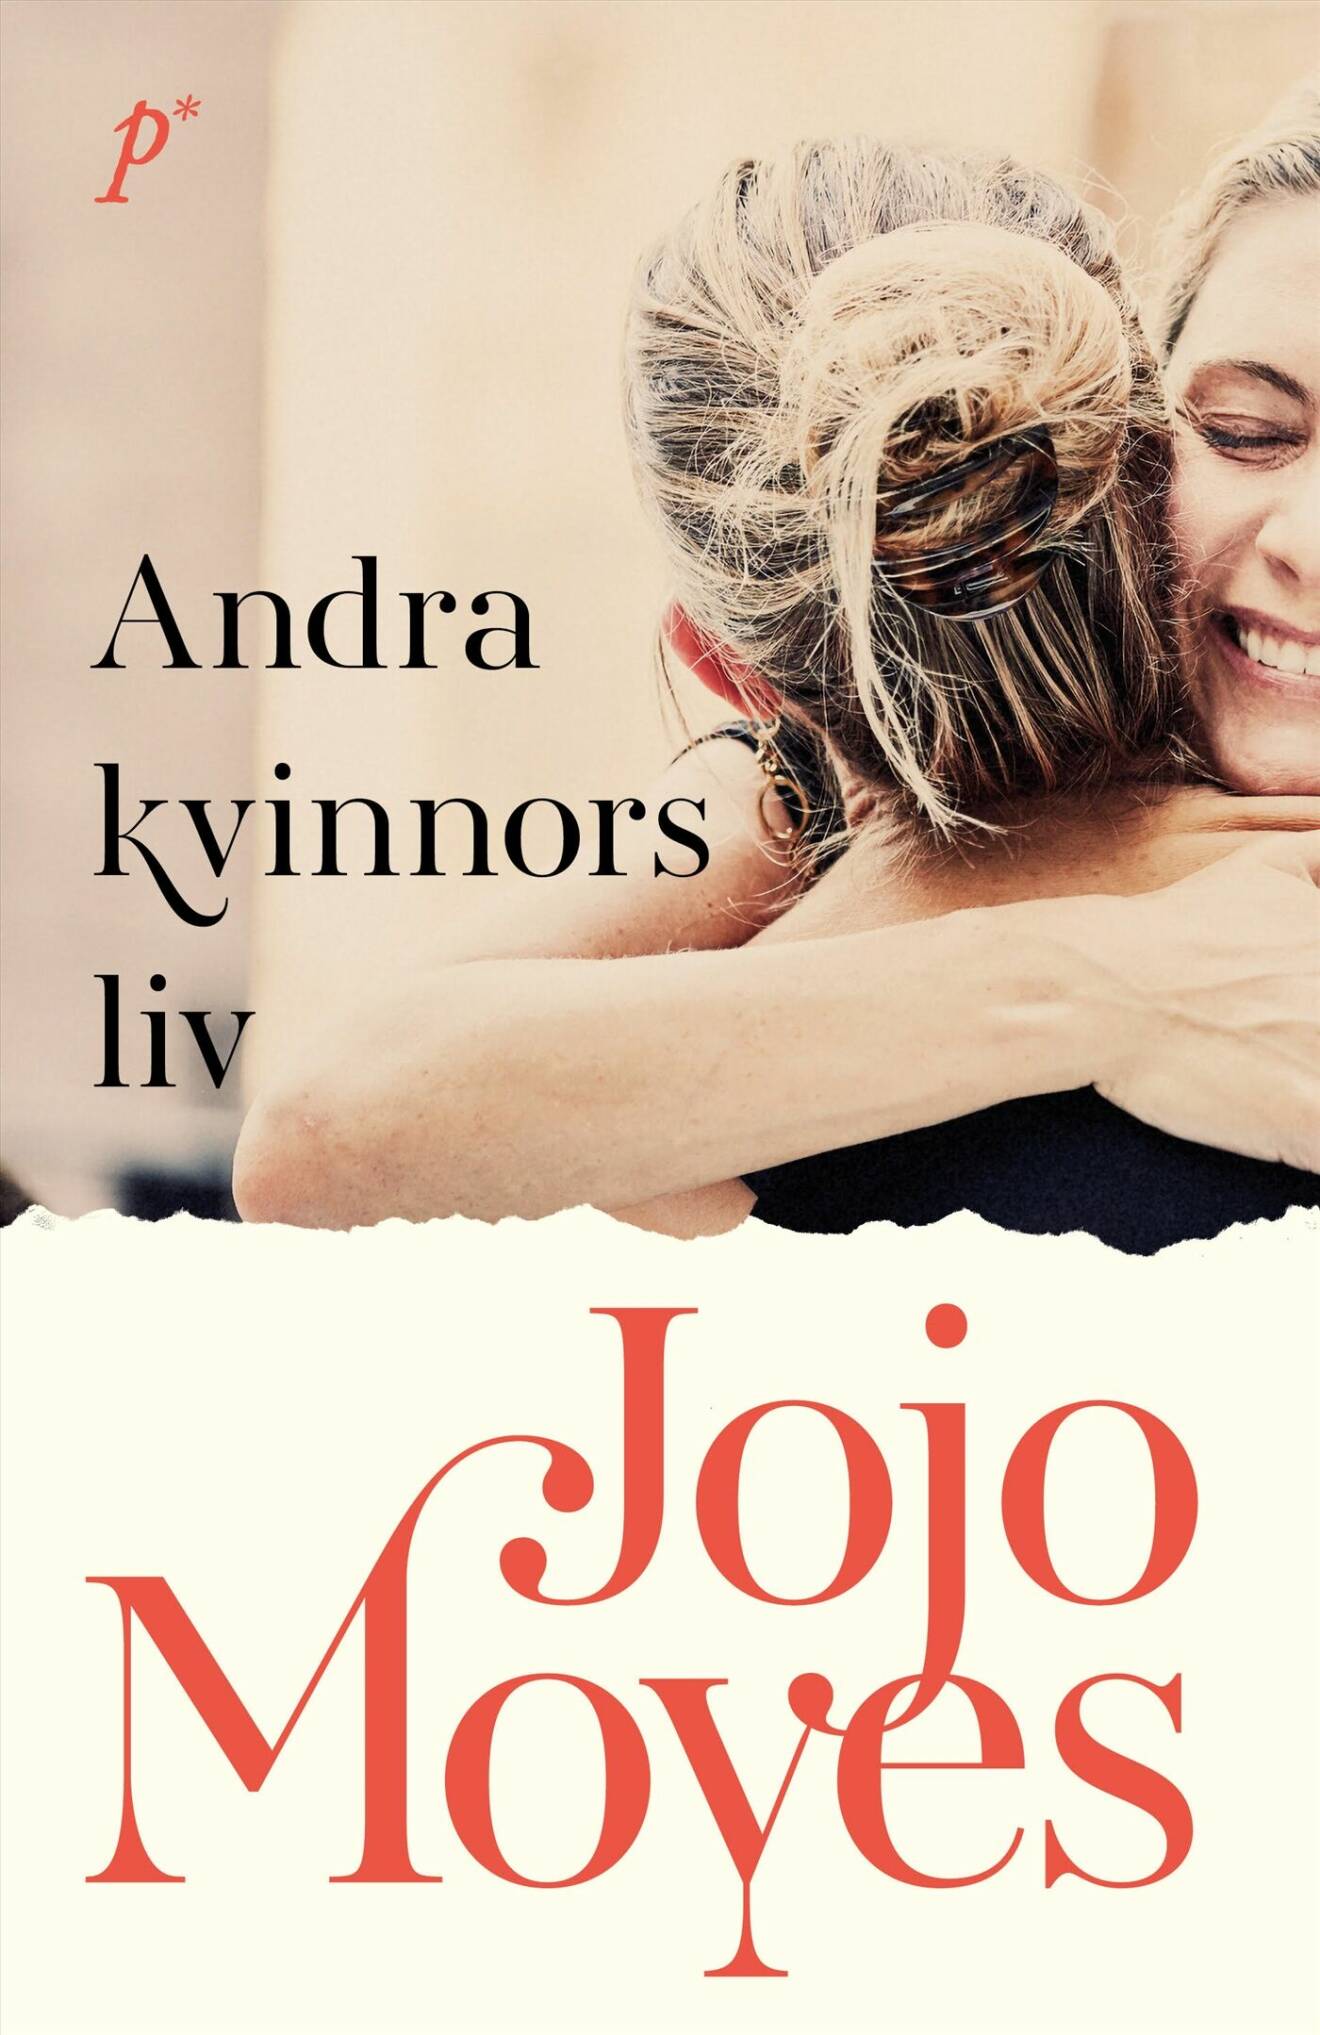 Bokomslag Andra kvinnors liv av Jojo Moyes